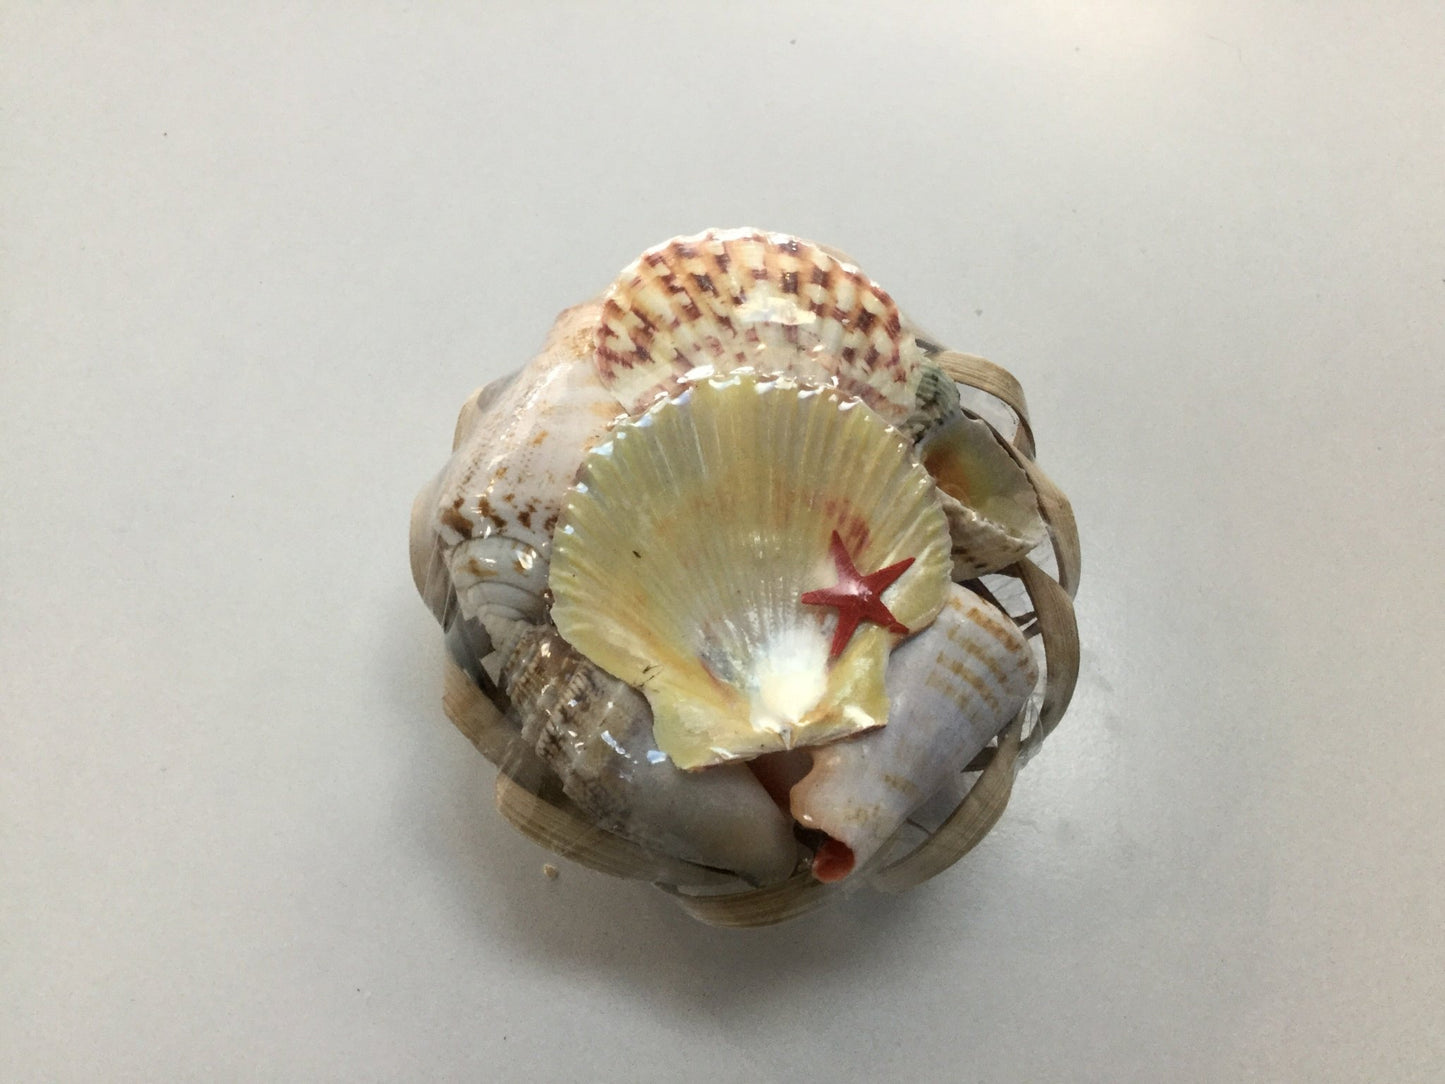 Shells - Small basket